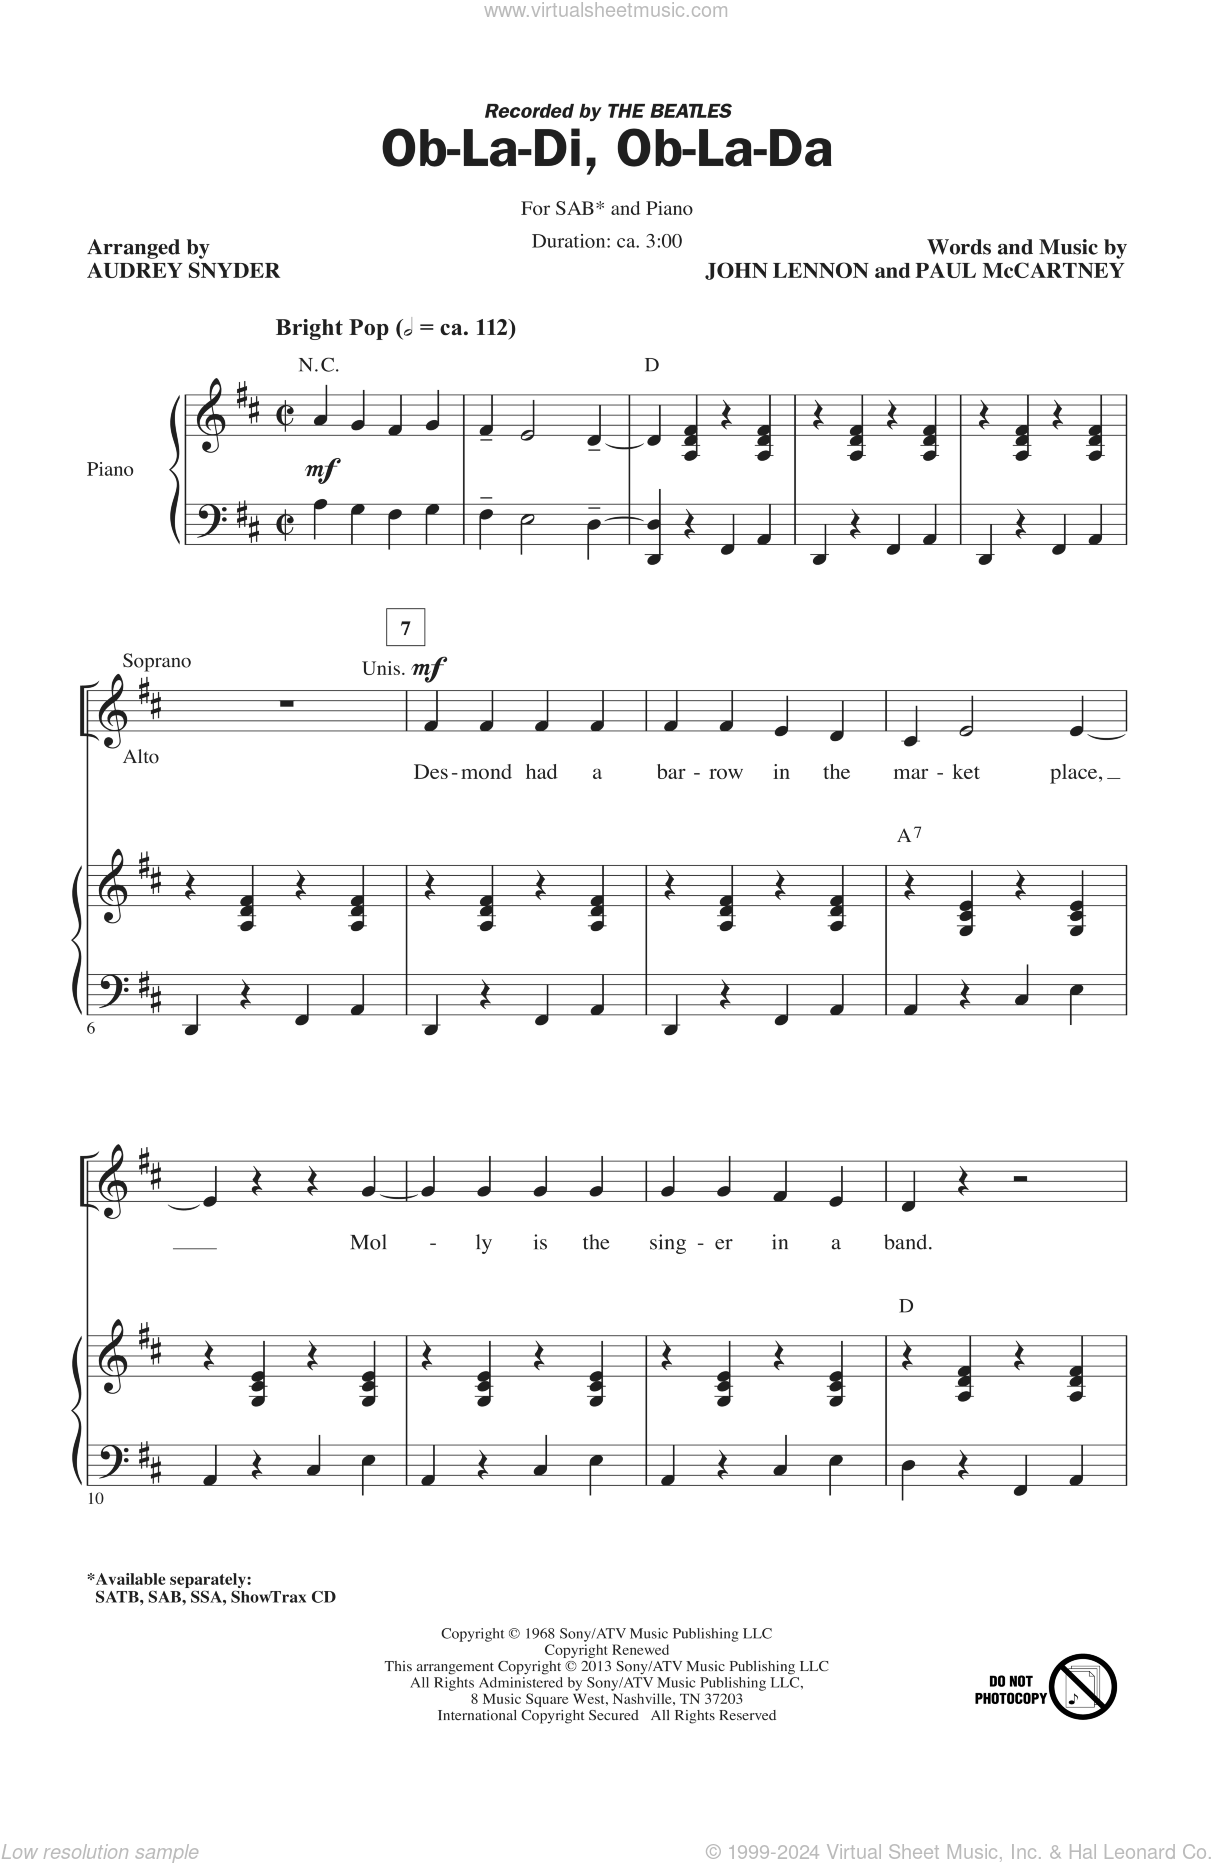 Dobrados Militares sheet music  Play, print, and download in PDF or MIDI  sheet music on